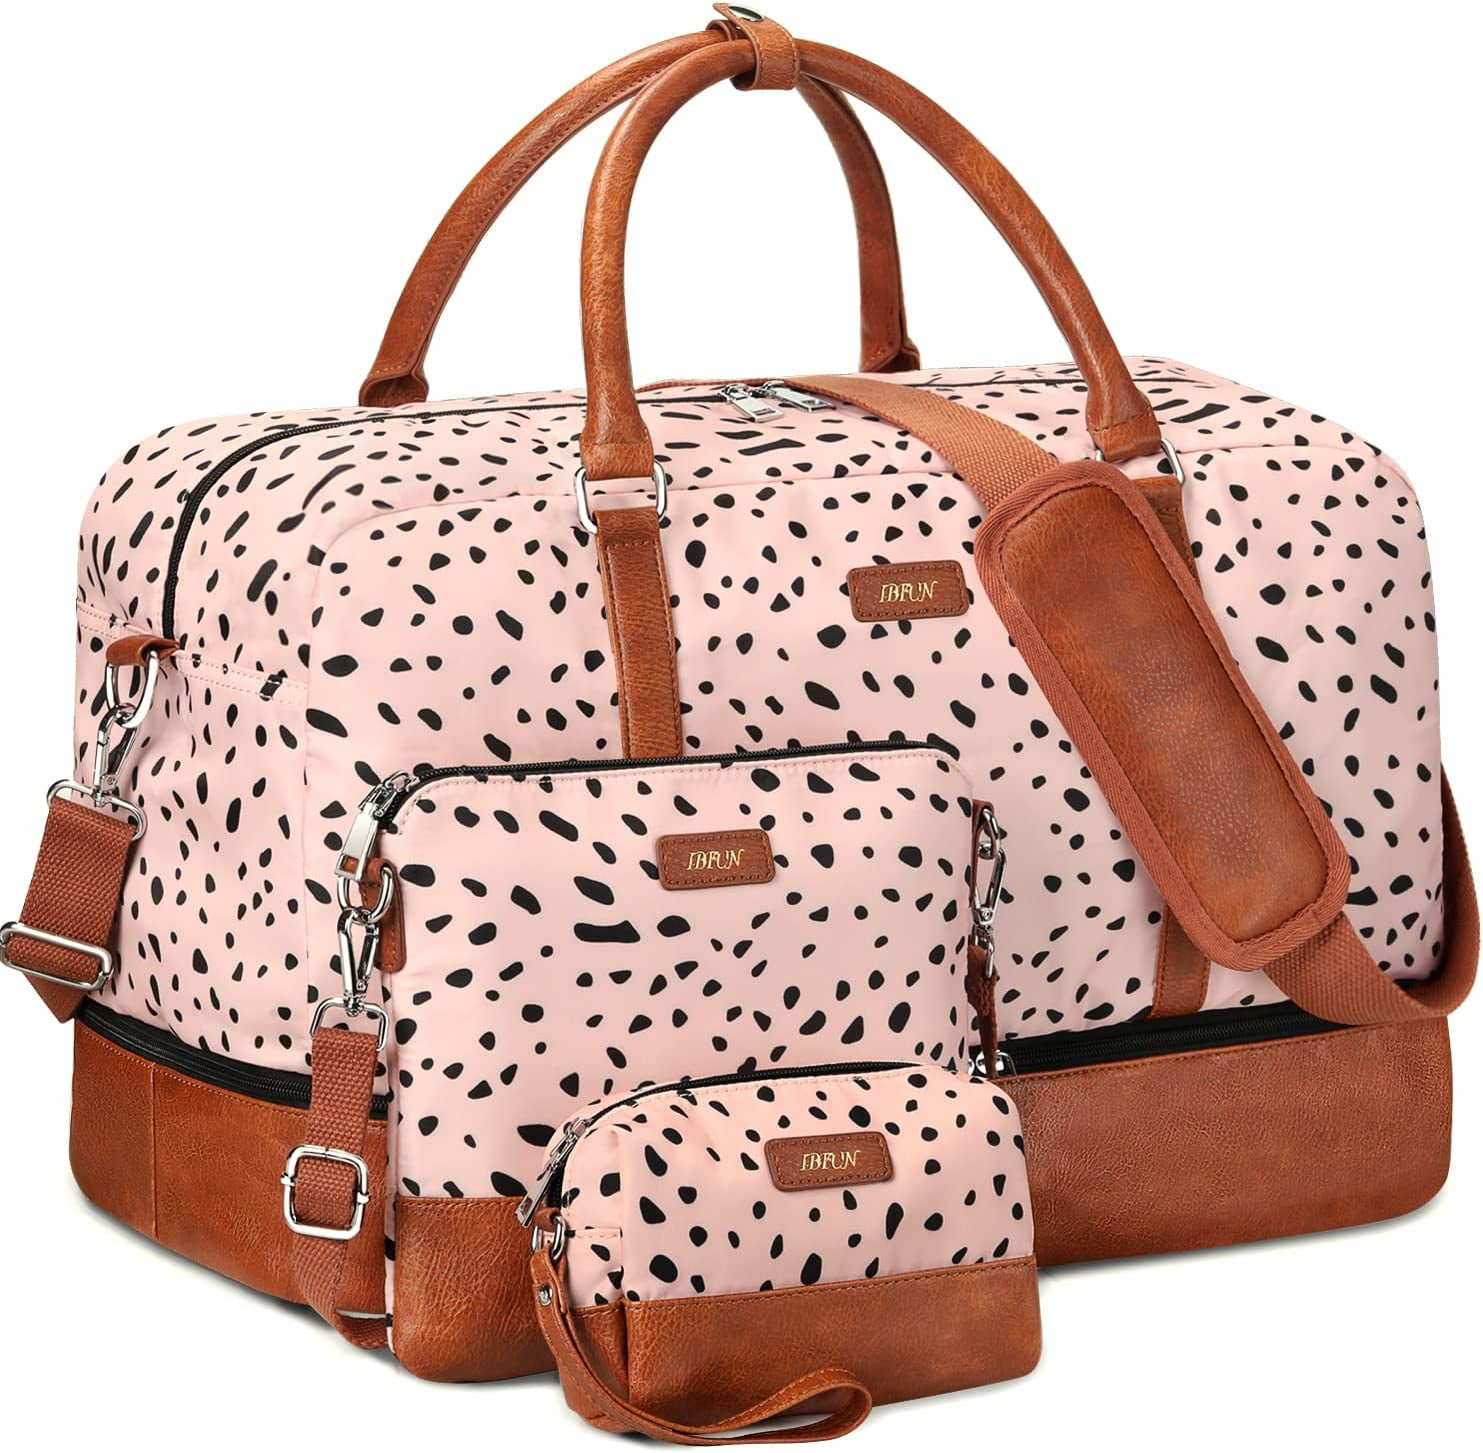  IBFUN Handbags for Women PU Leather Satchel Purse